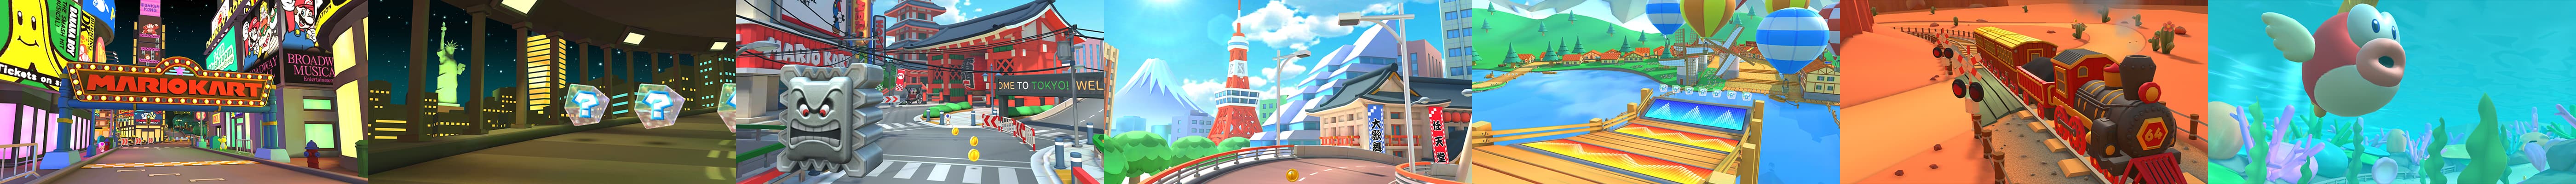 Mario Kart Tour for iOS/Android - Nintendo Official Site